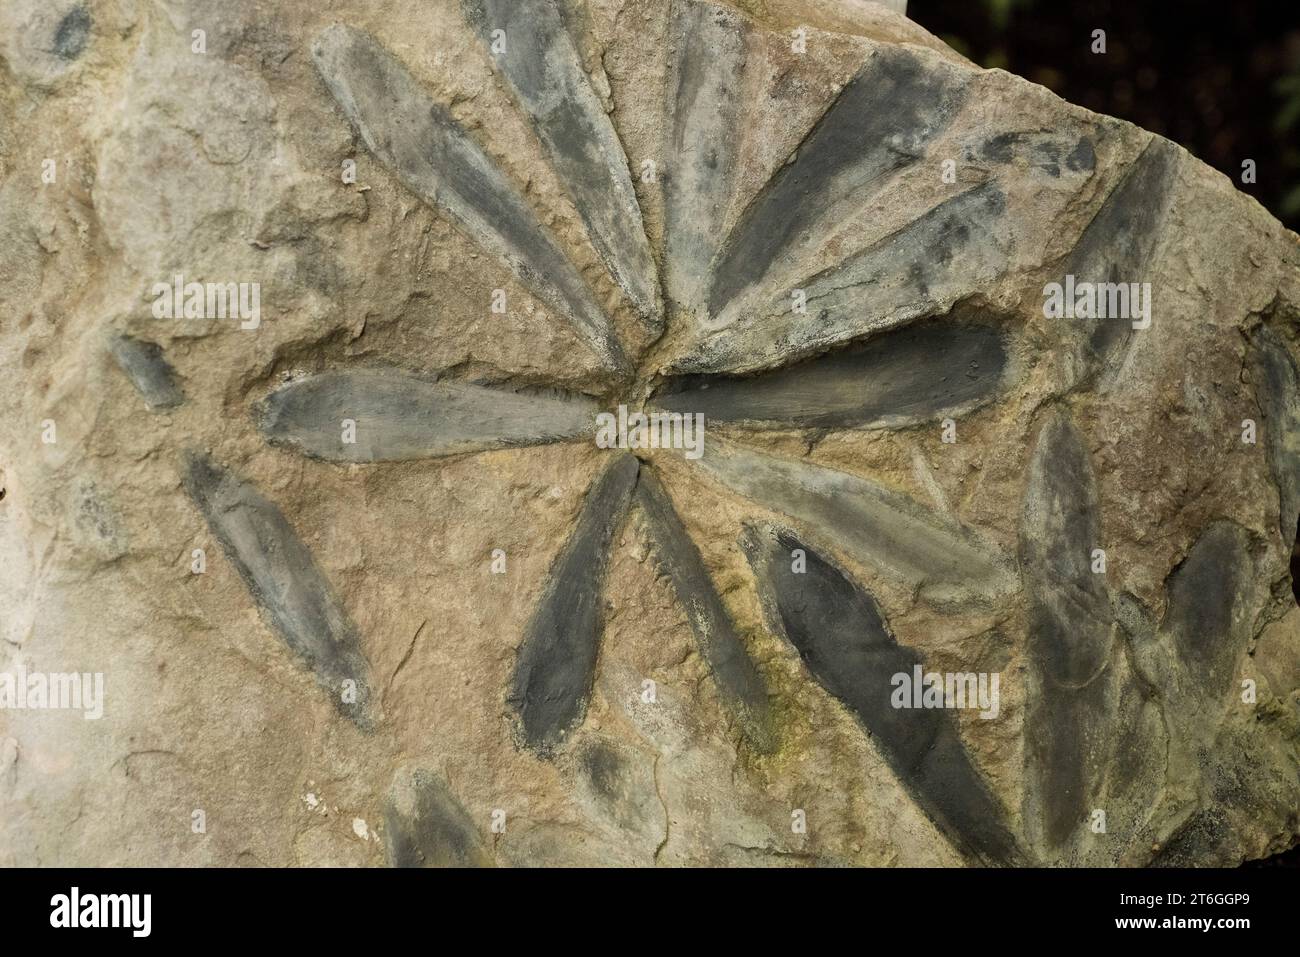 Cordaites lungatus is a fossil gymnosperm from Carboniferous. Sample. Stock Photo